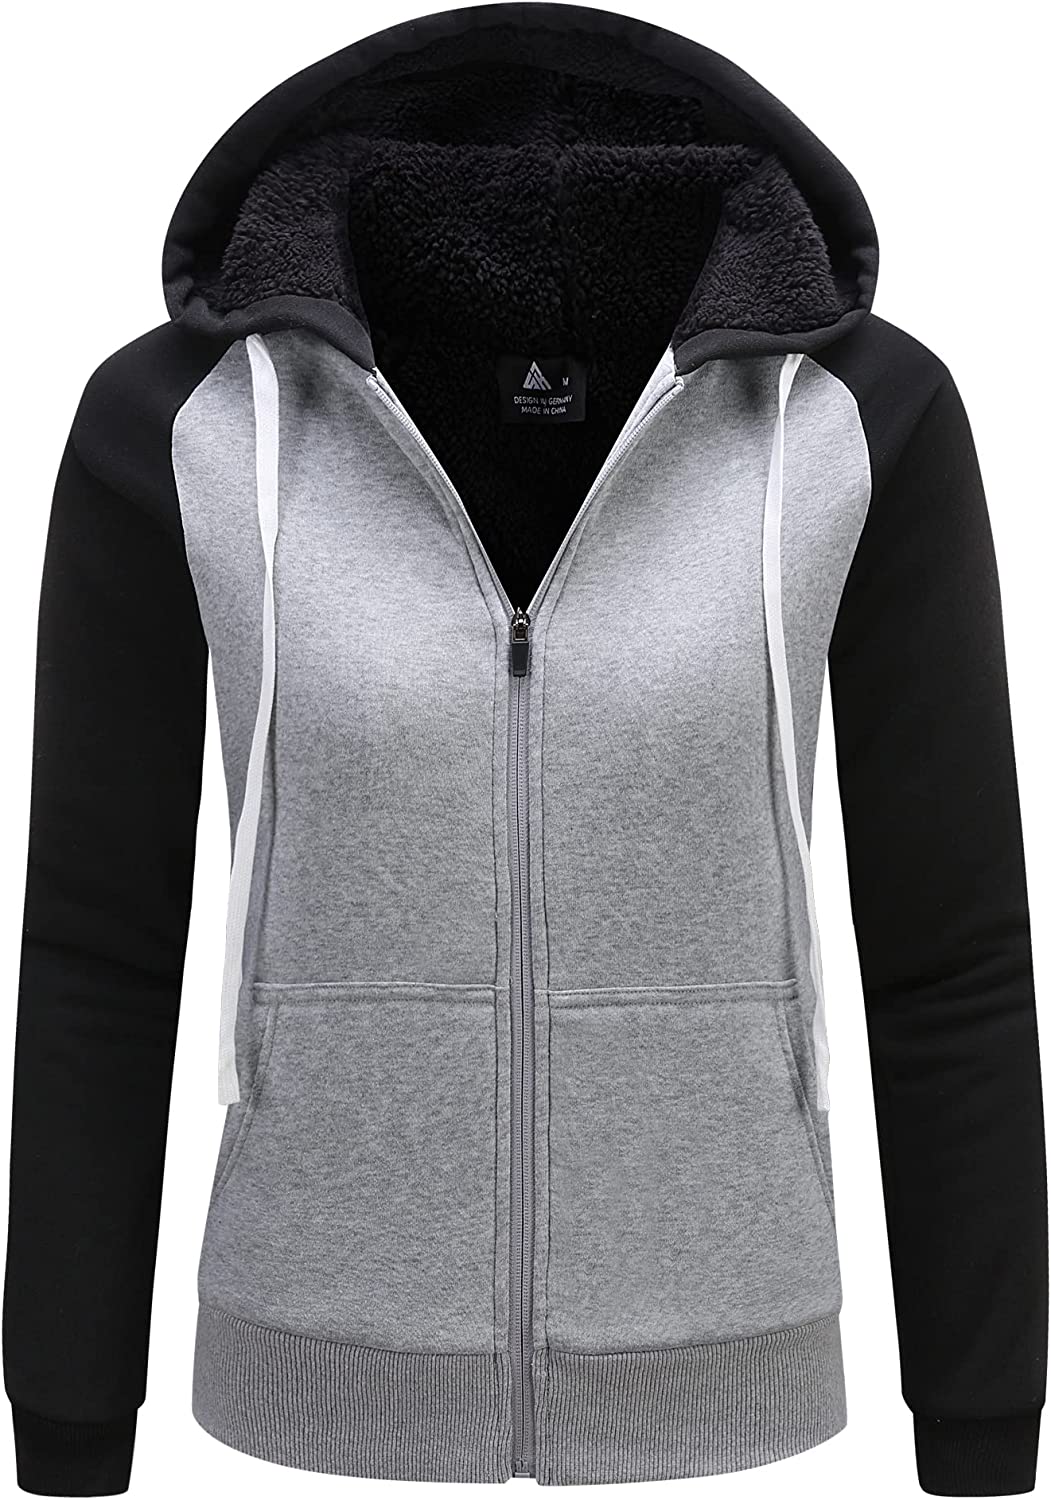 LLdress Hoodies for Women Sherpa Lined Jacket Zip Up Thick Sweatshirt Warm  Fleece Coat